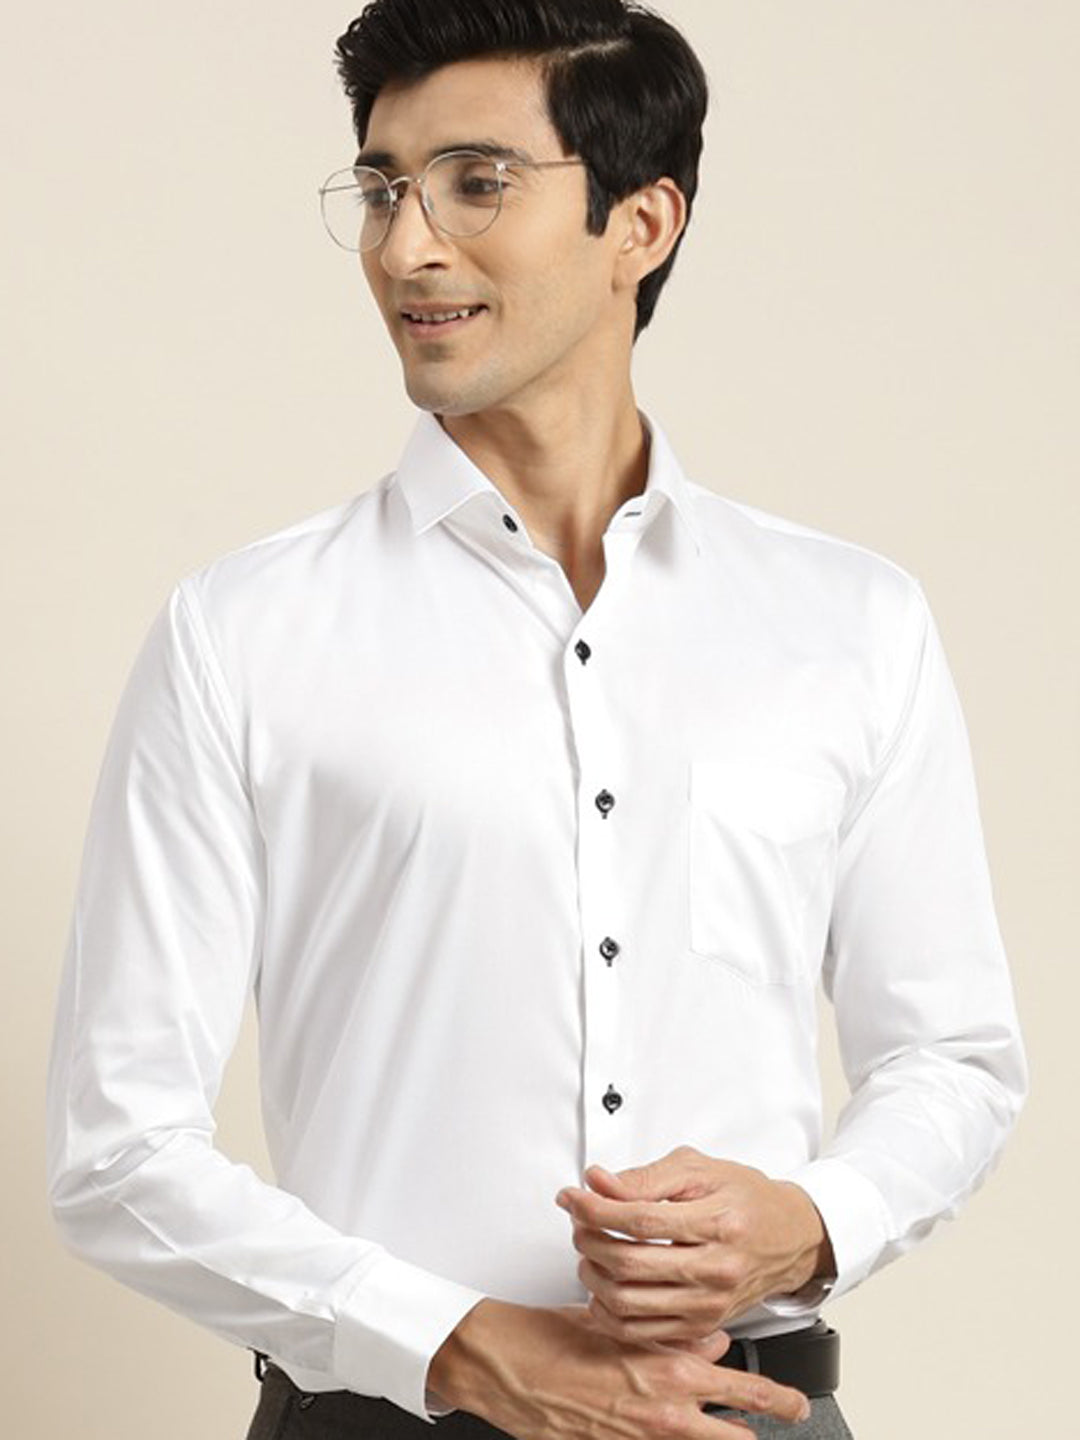  Men's Black And White Shirt